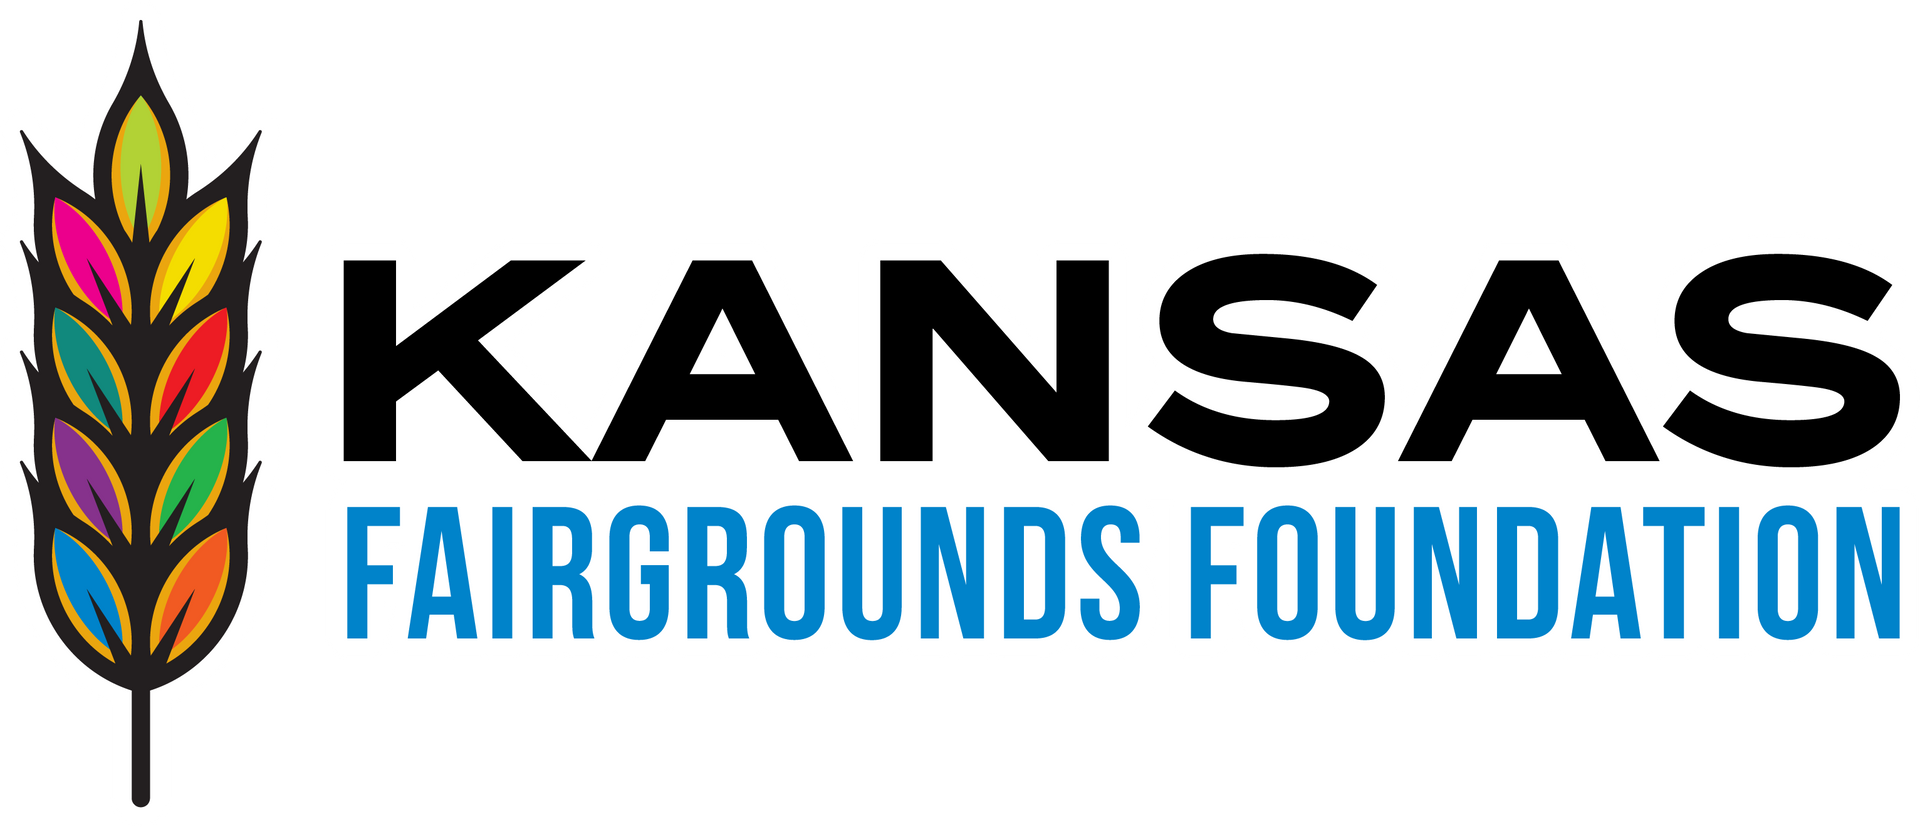 the kansas fairgrounds foundation logo has colorful wheat on it